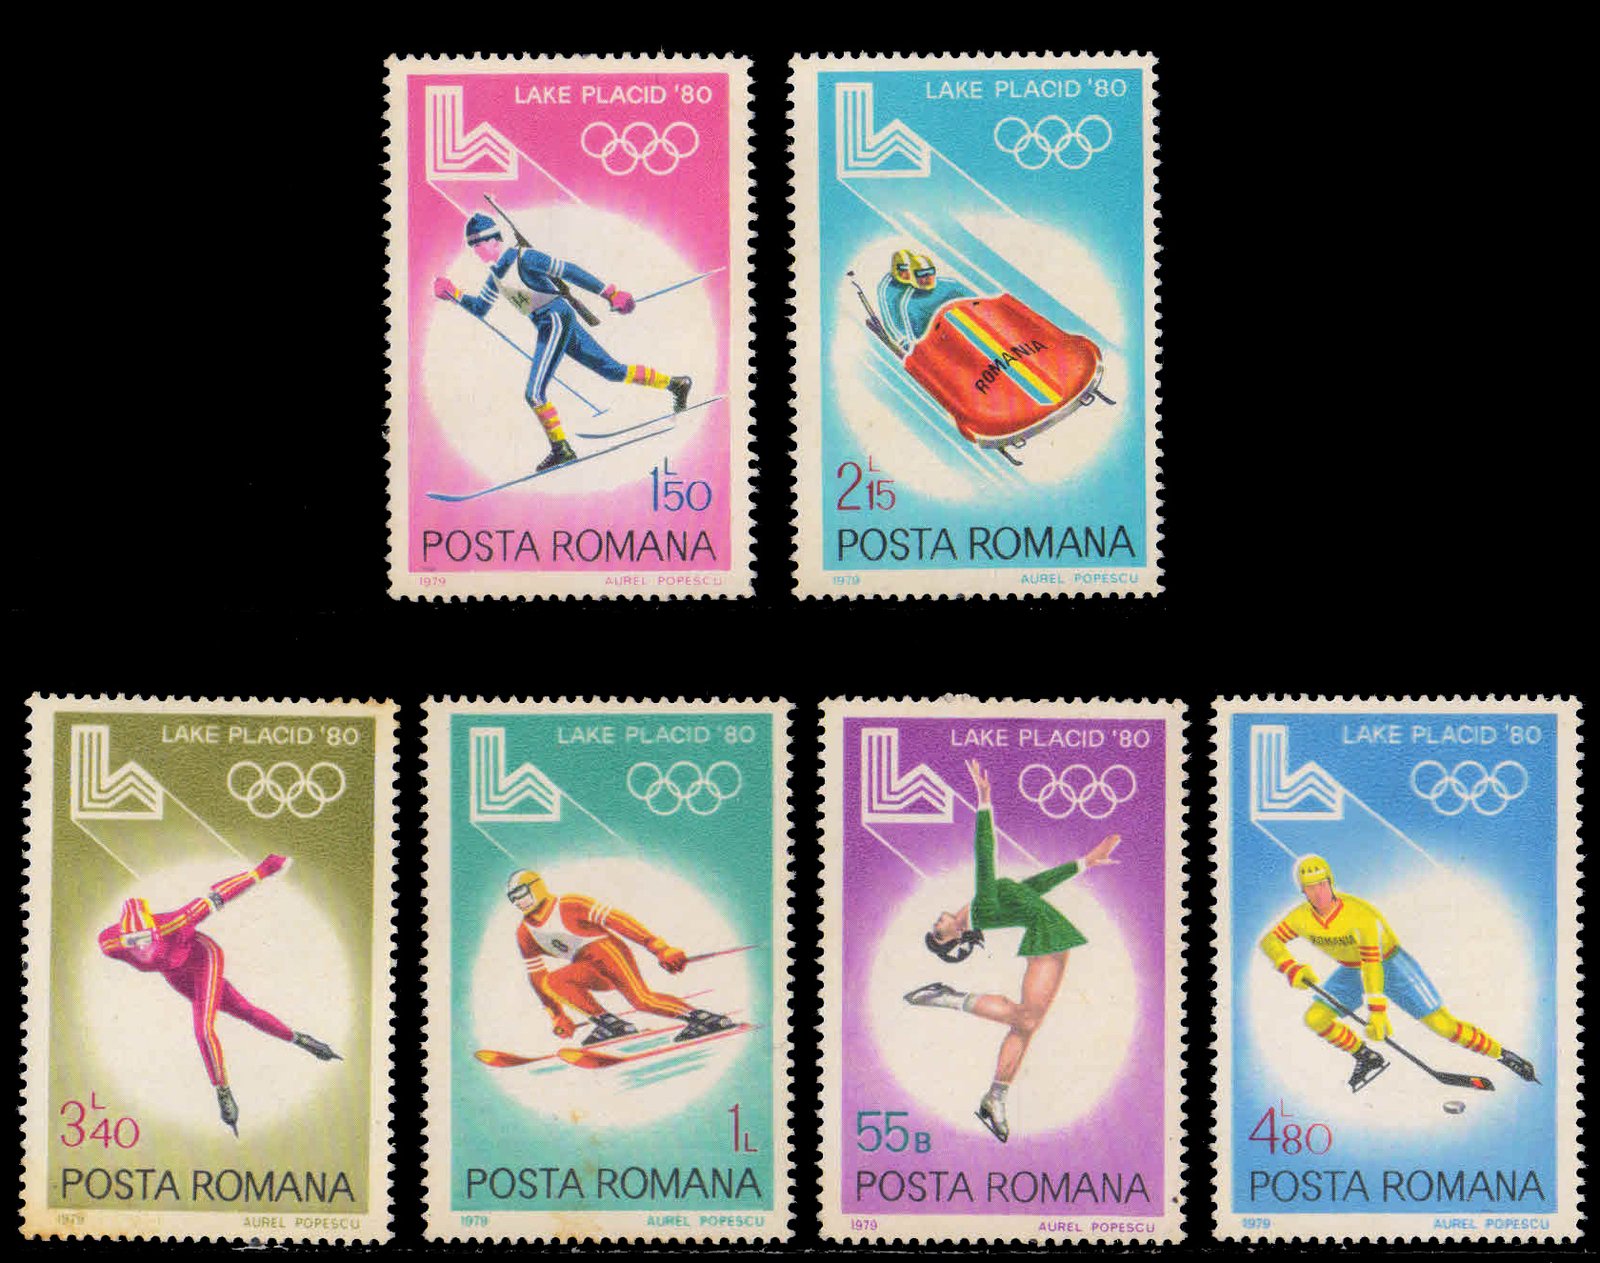 ROMANIA 1979-Winter Olympic Games, Ice Hockey, Skating, Skiing, Set of 6, MNH, S.G. 4528-33